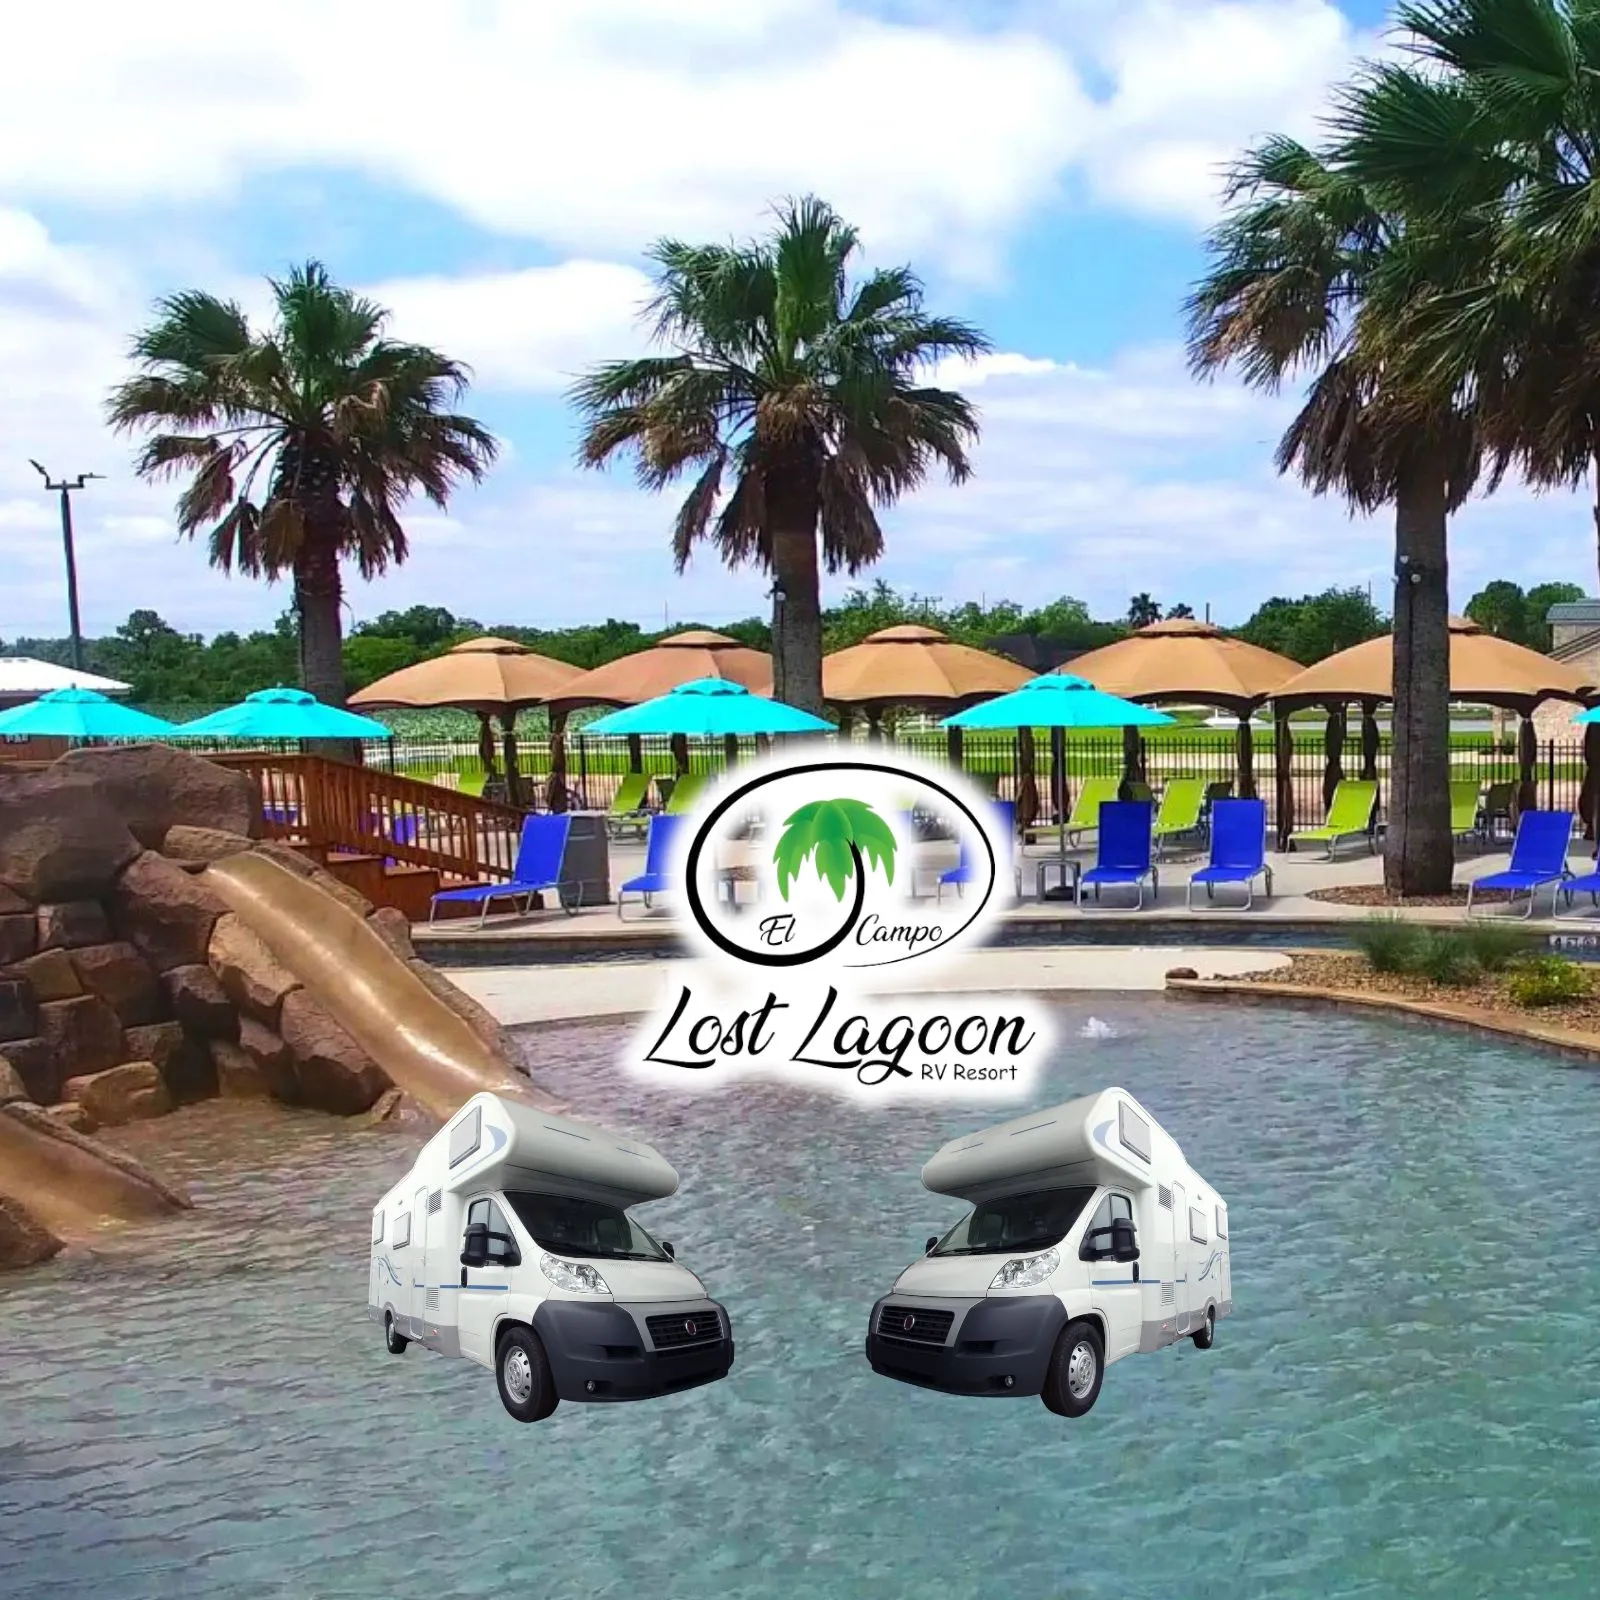 Lost-Lagoon-RV-Resort_Mobile_ET